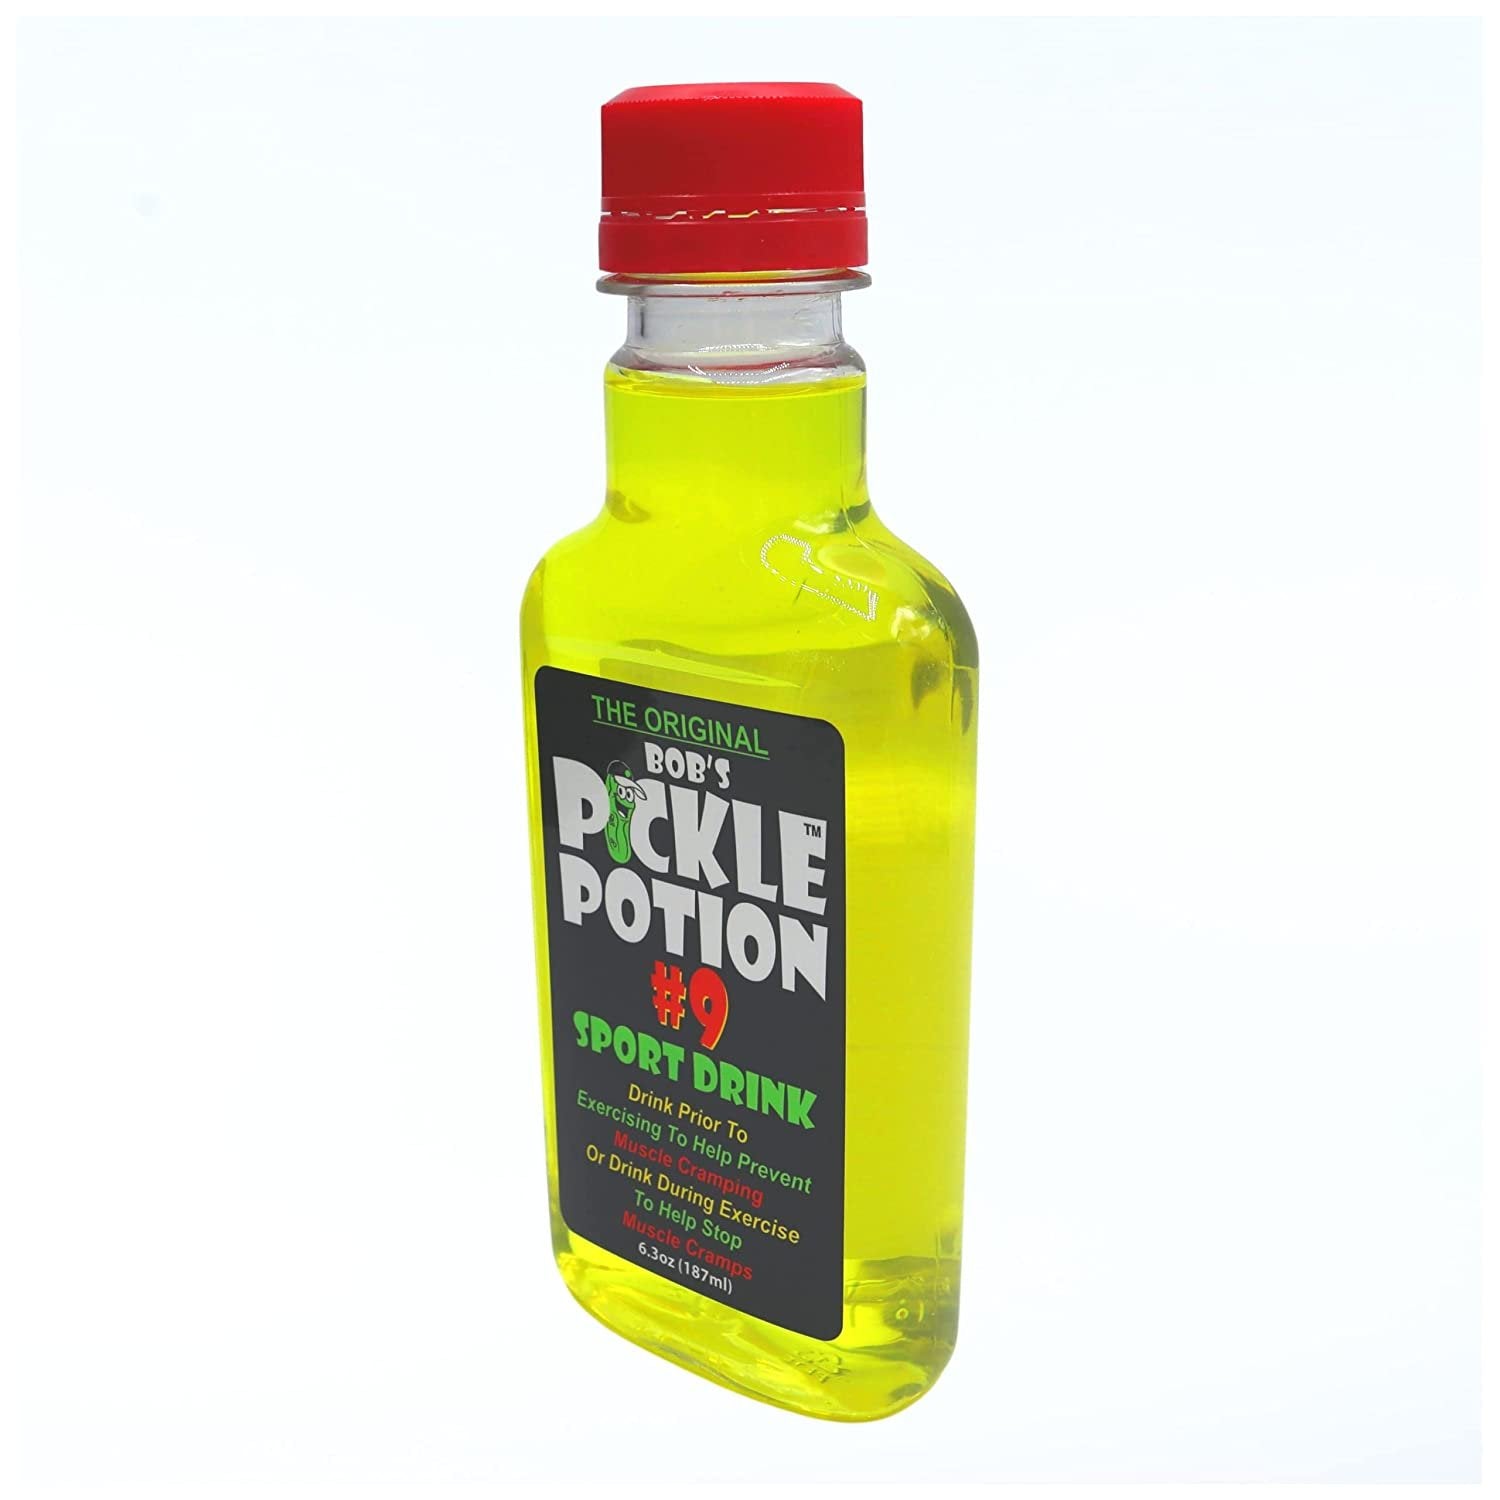 Bob's Pickle Potion #9 Sport Drink - 6.3 Oz 187ml - Individual Pickle Juice Bottles - Sports Drink for Post or Pre Workout - Muscle Cramp Support Pickle Juice Drink